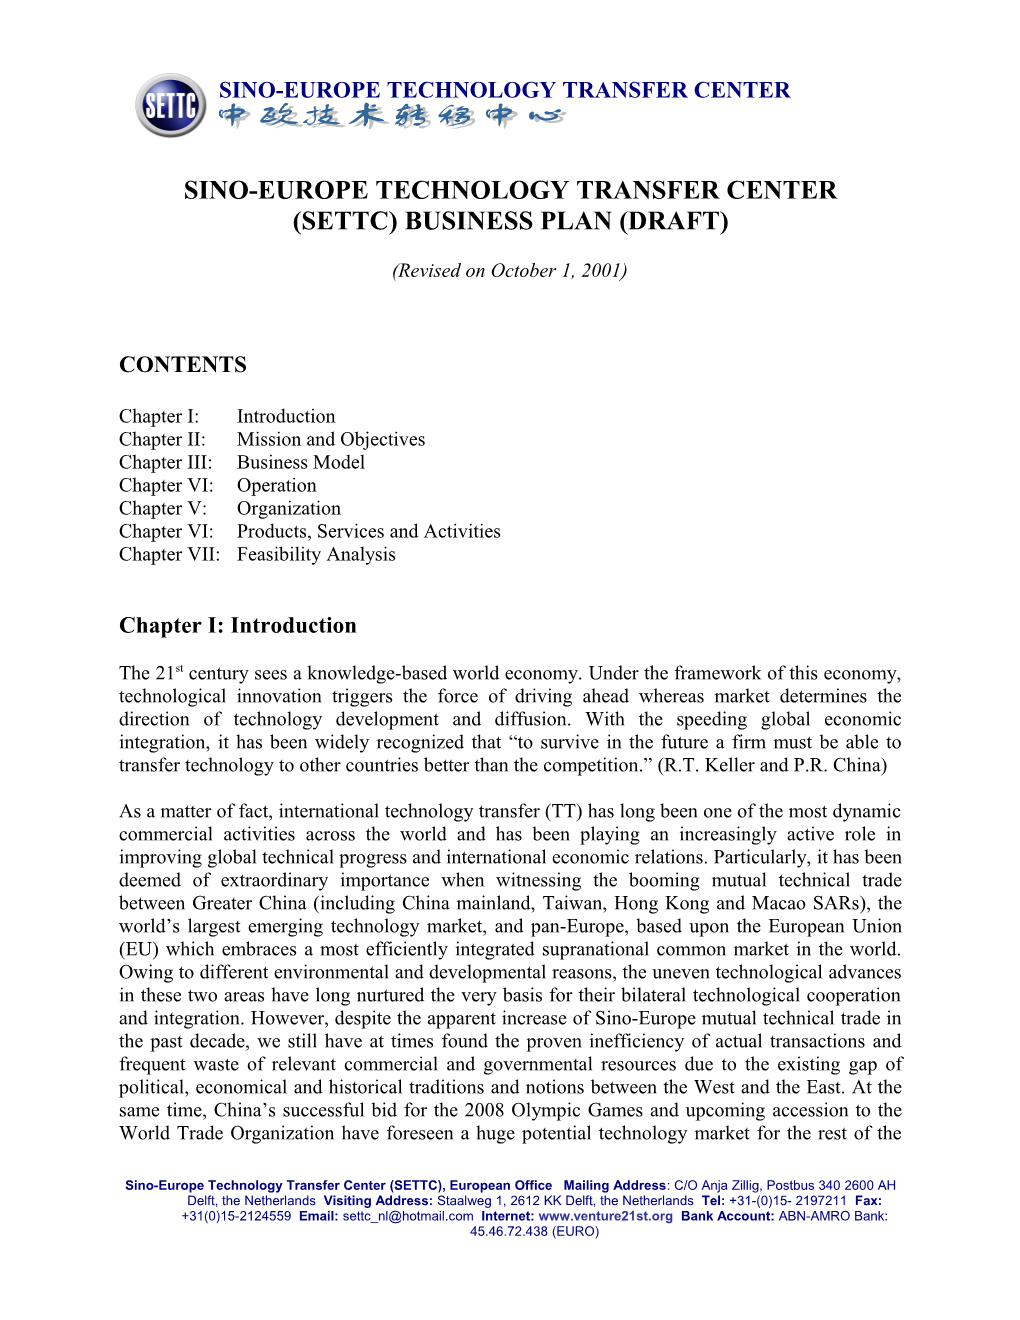 Sino-Europe Technology Transfer Center